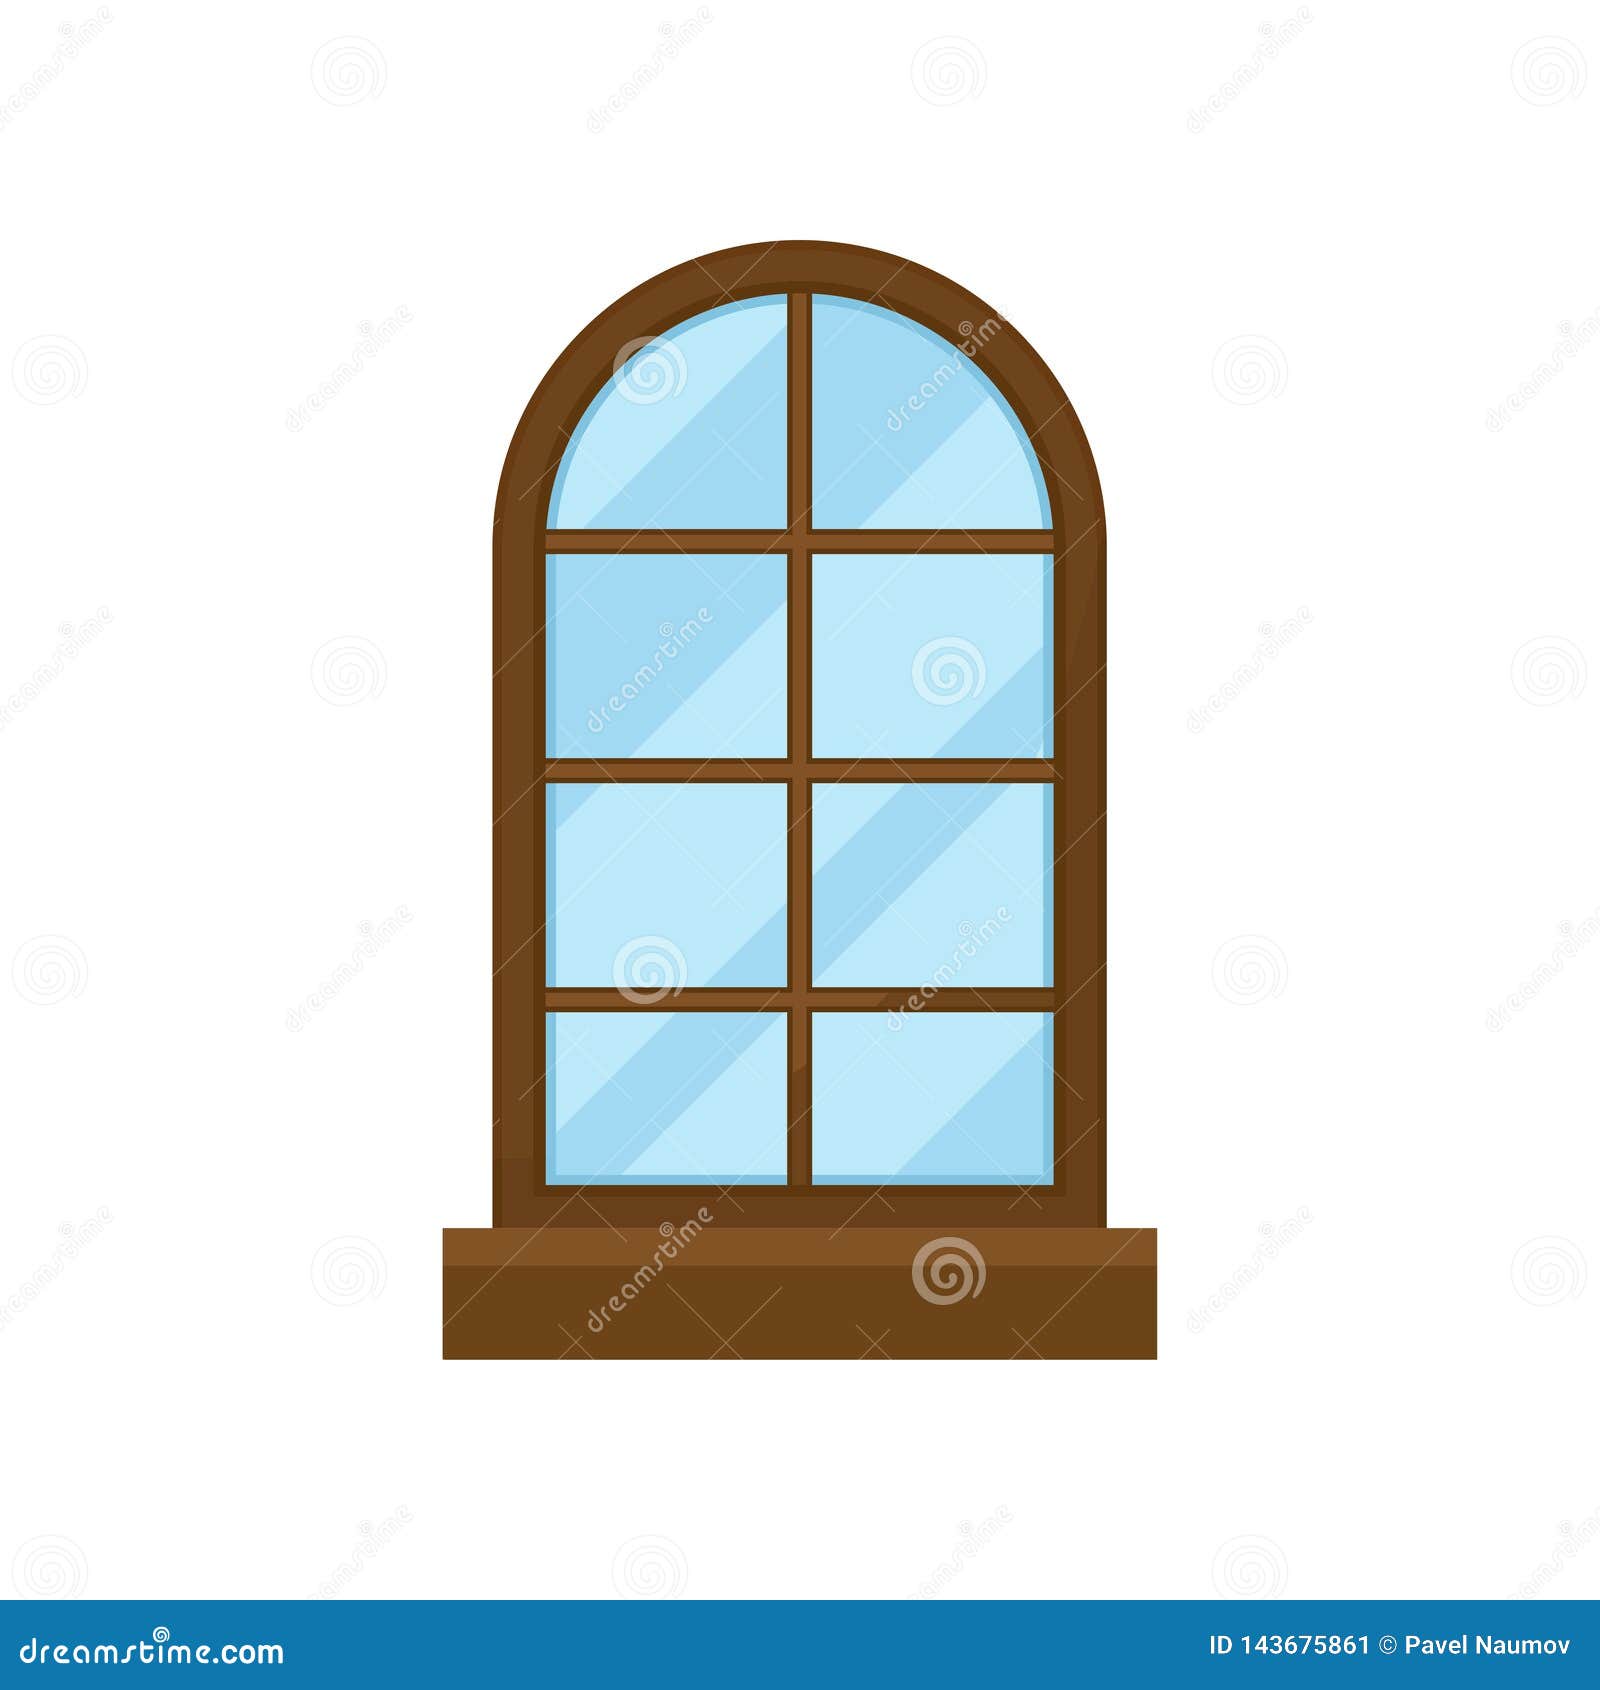 types of arch windows